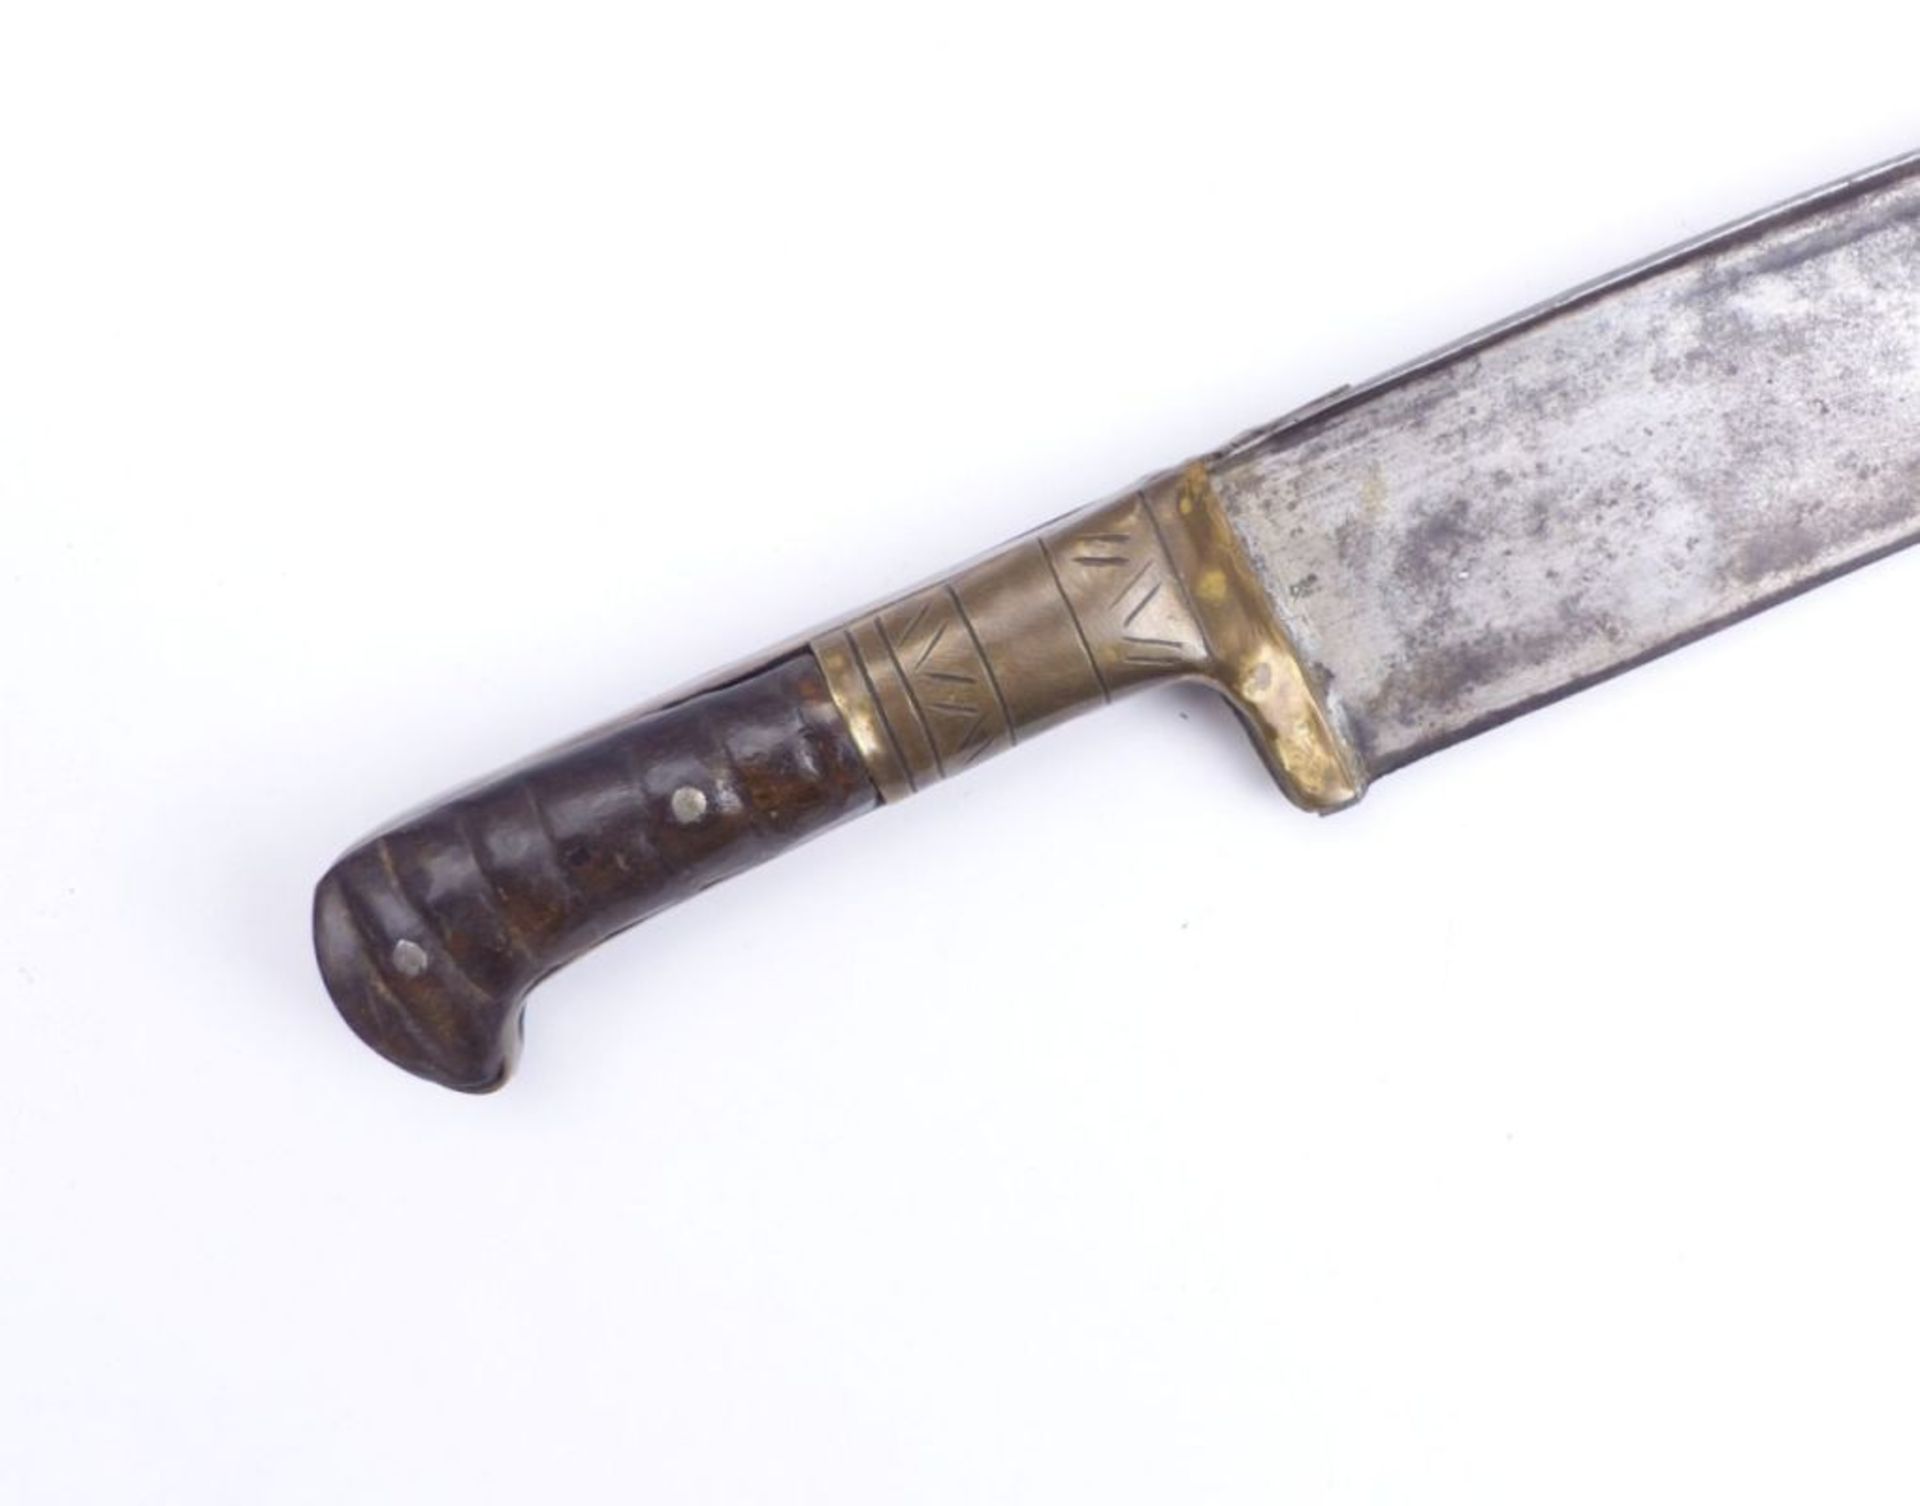 Khyber knife - Image 2 of 3